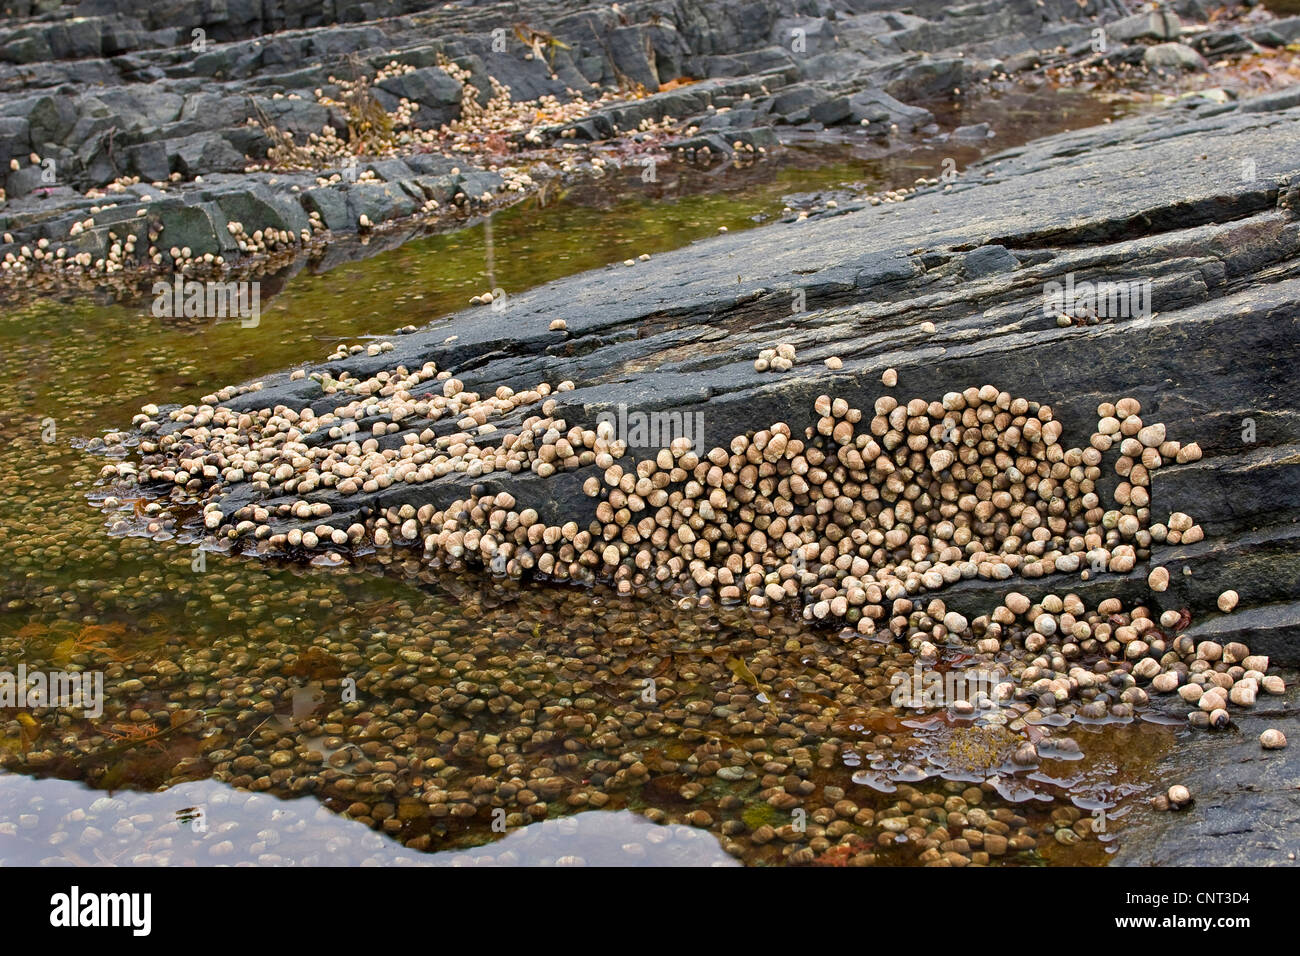 common periwinkle, common winkle, edible winkle (Littorina littorea), at low tide on coast rocks Stock Photo